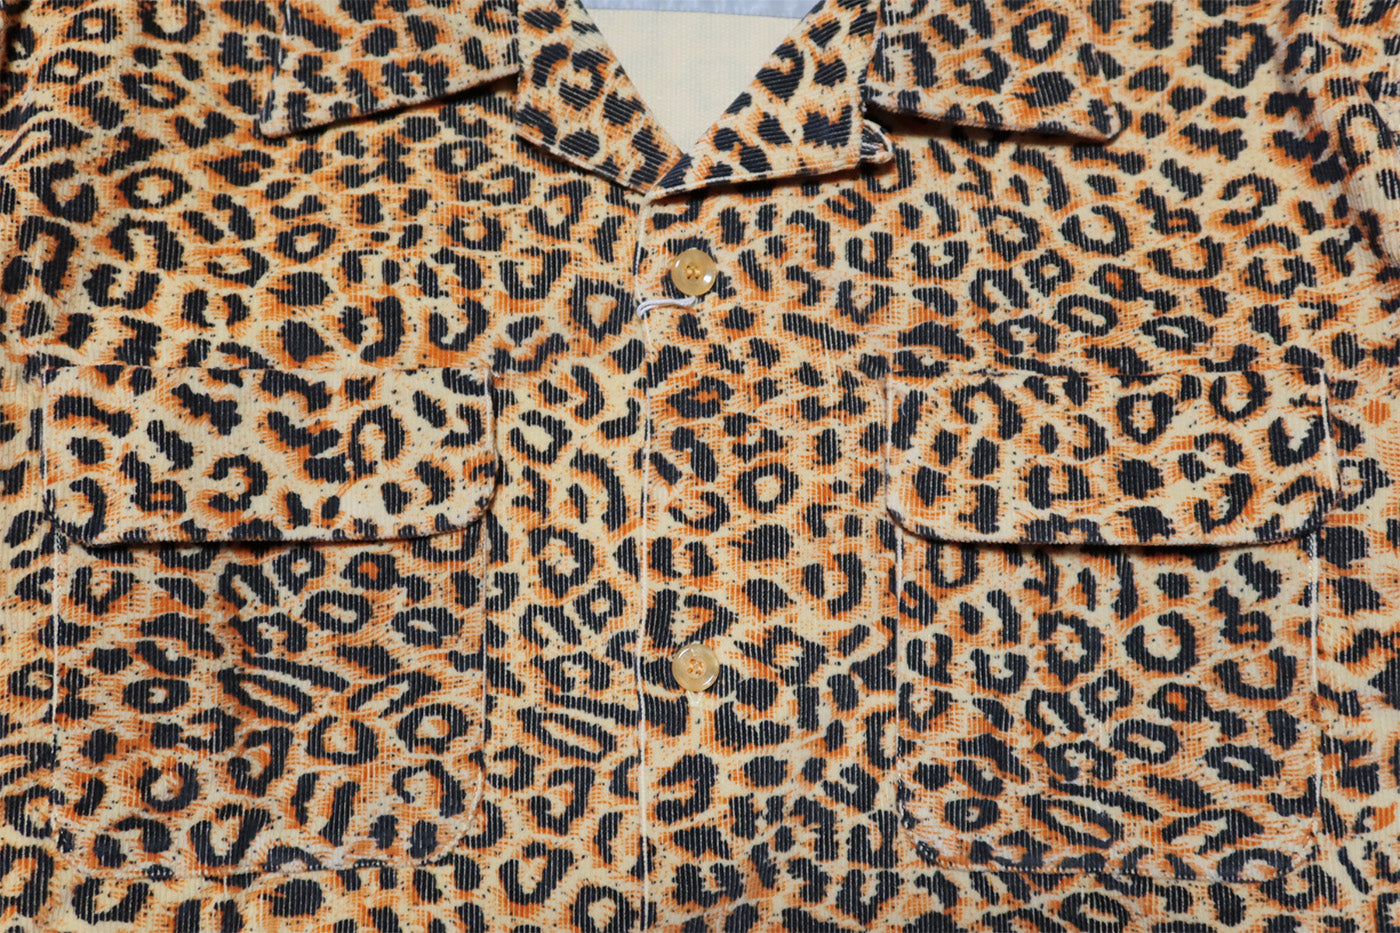 Style Eyes Corduroy Sports Shirt Leopard Open Shirt Leopard Print Made in Japan SE29173